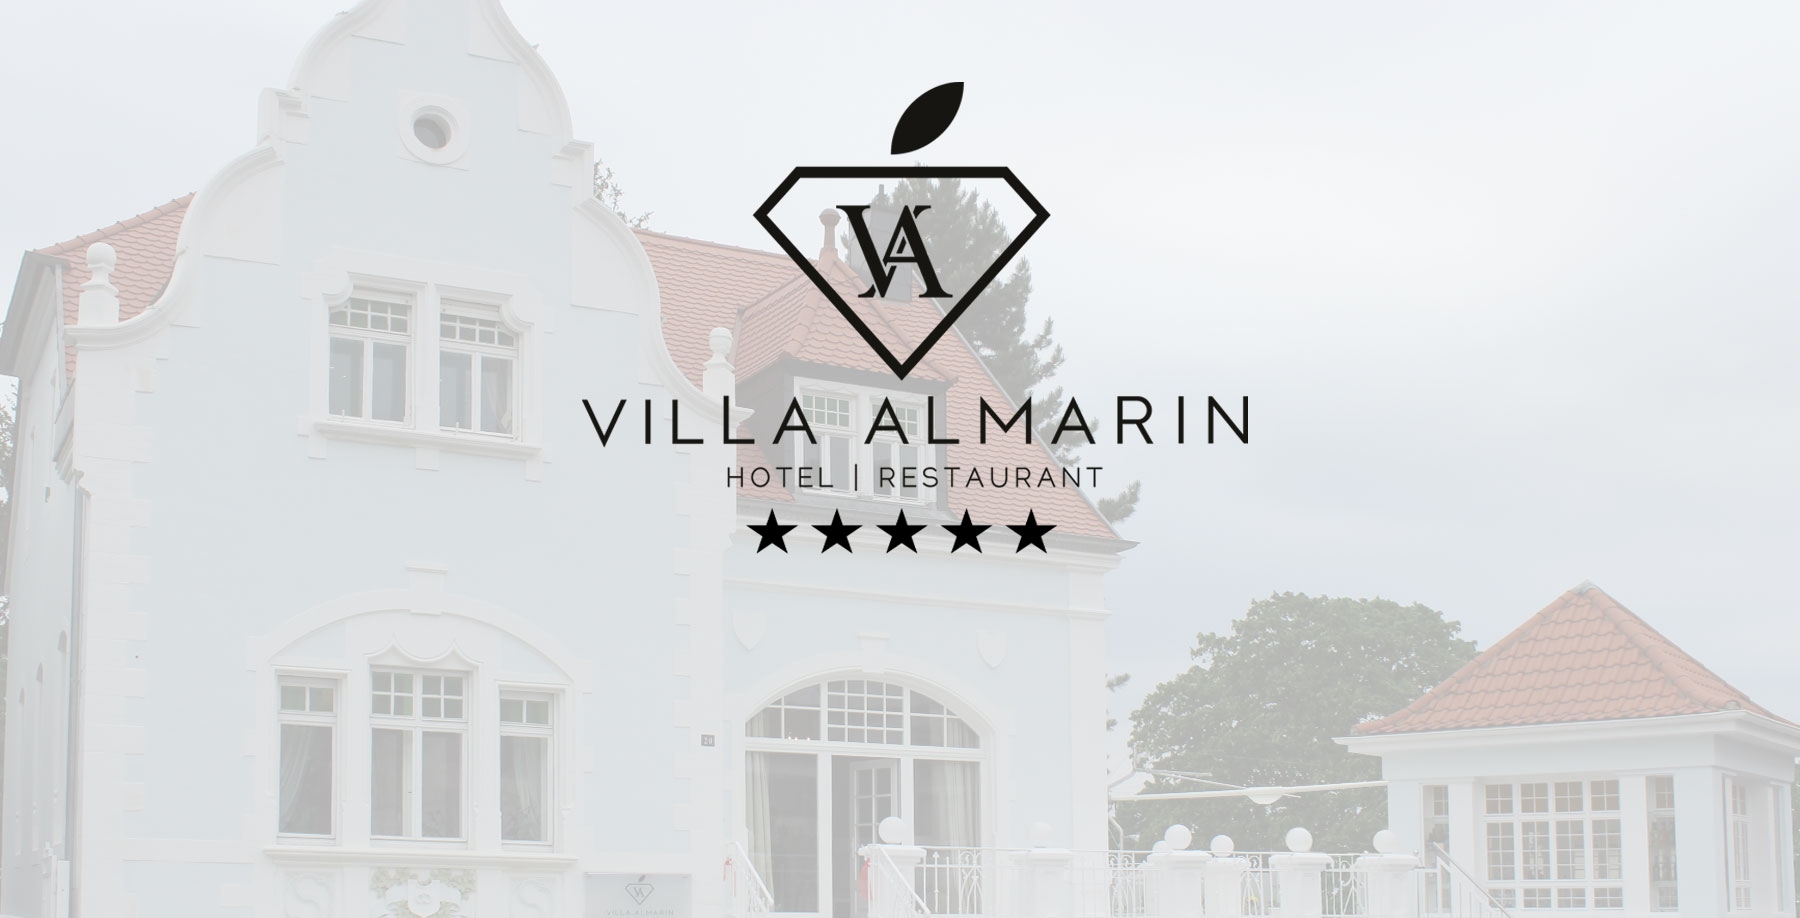 Отель Villa Almarin - St. Ingbert - Германия